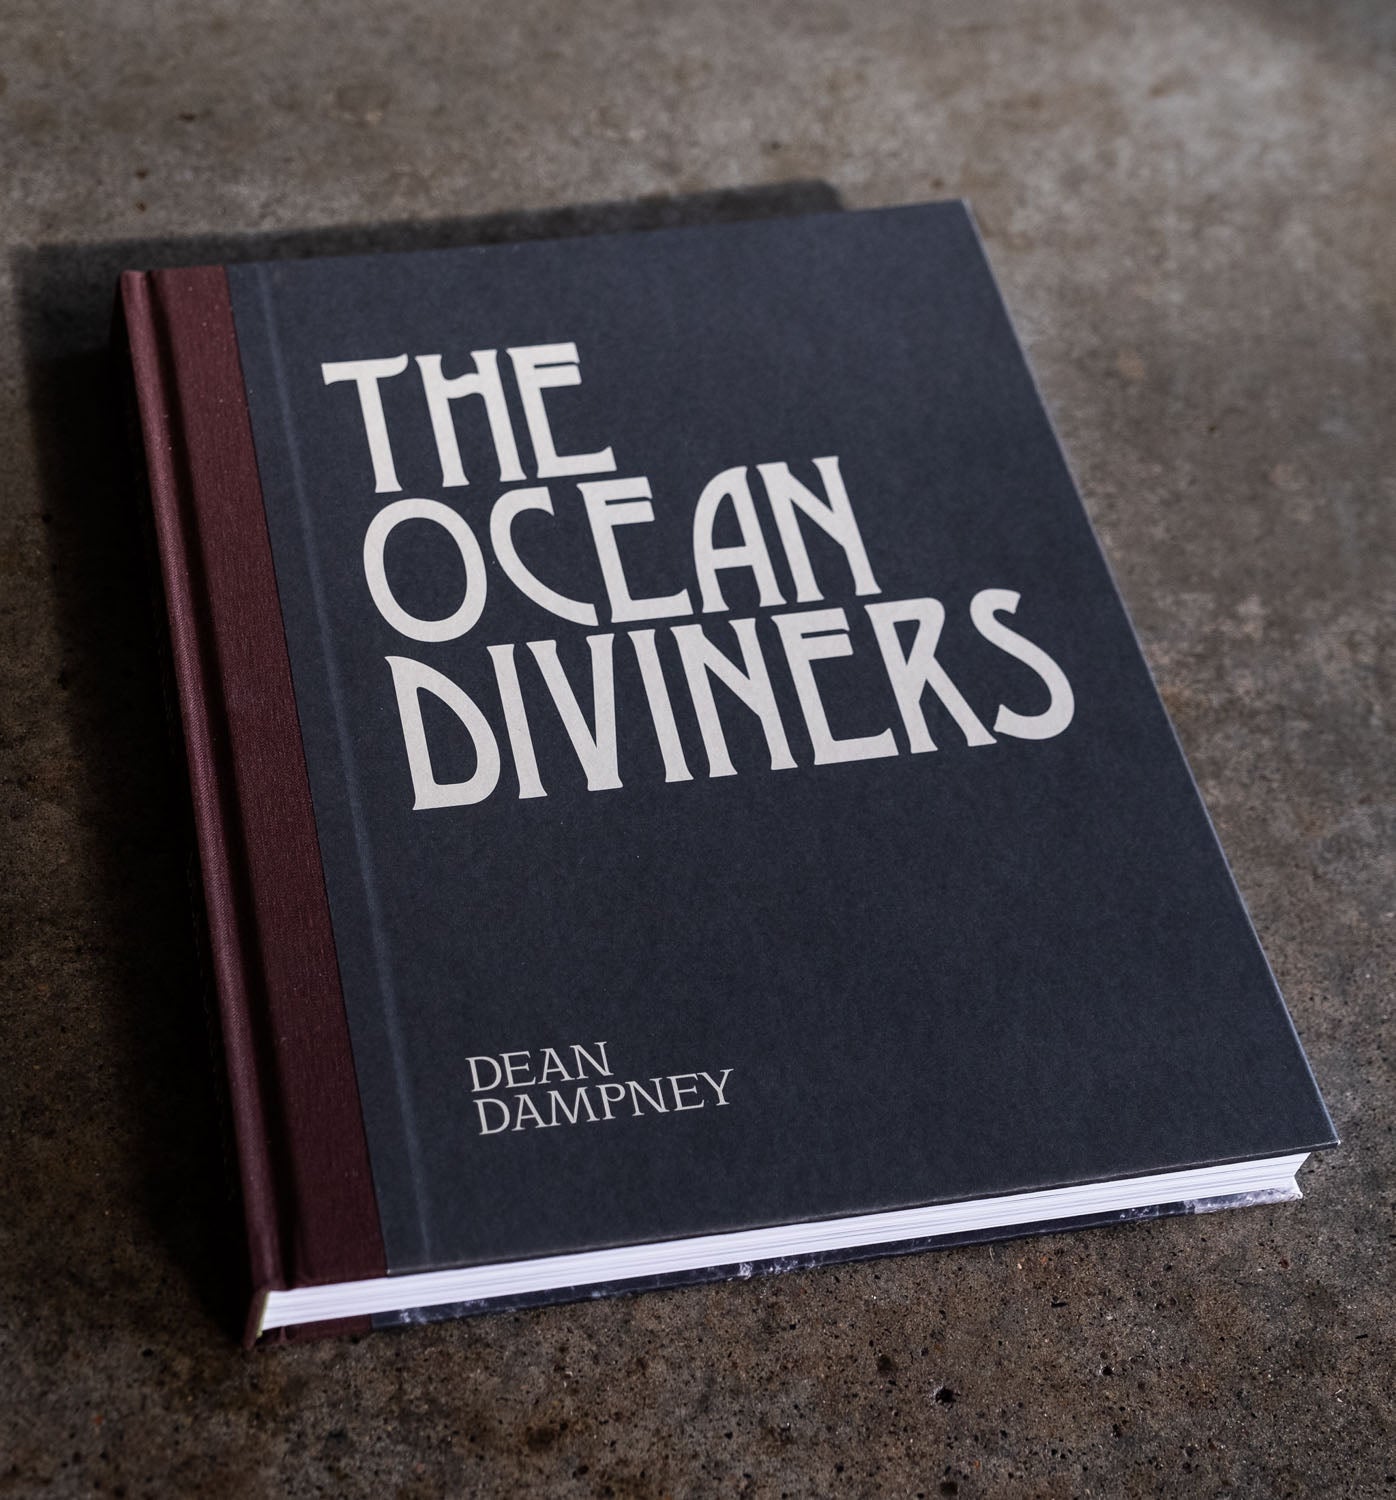 THE OCEAN DIVINERS